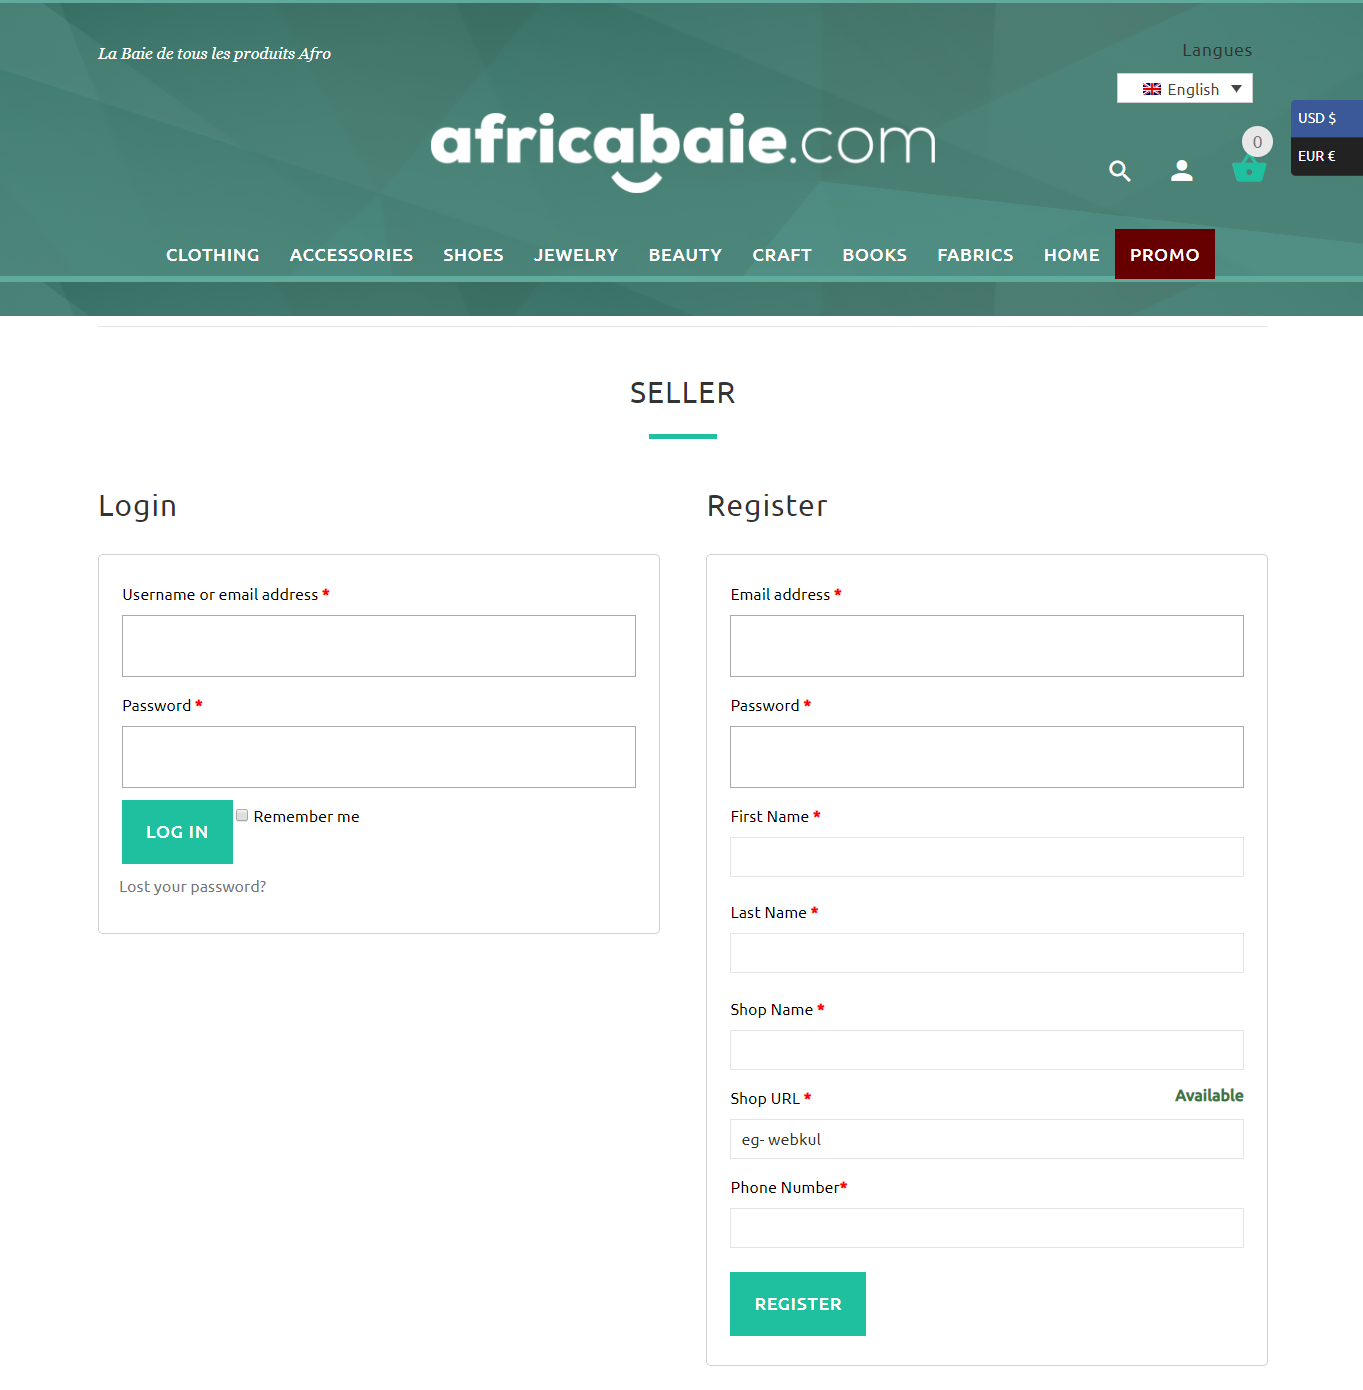 africabaie-seller-sign-up